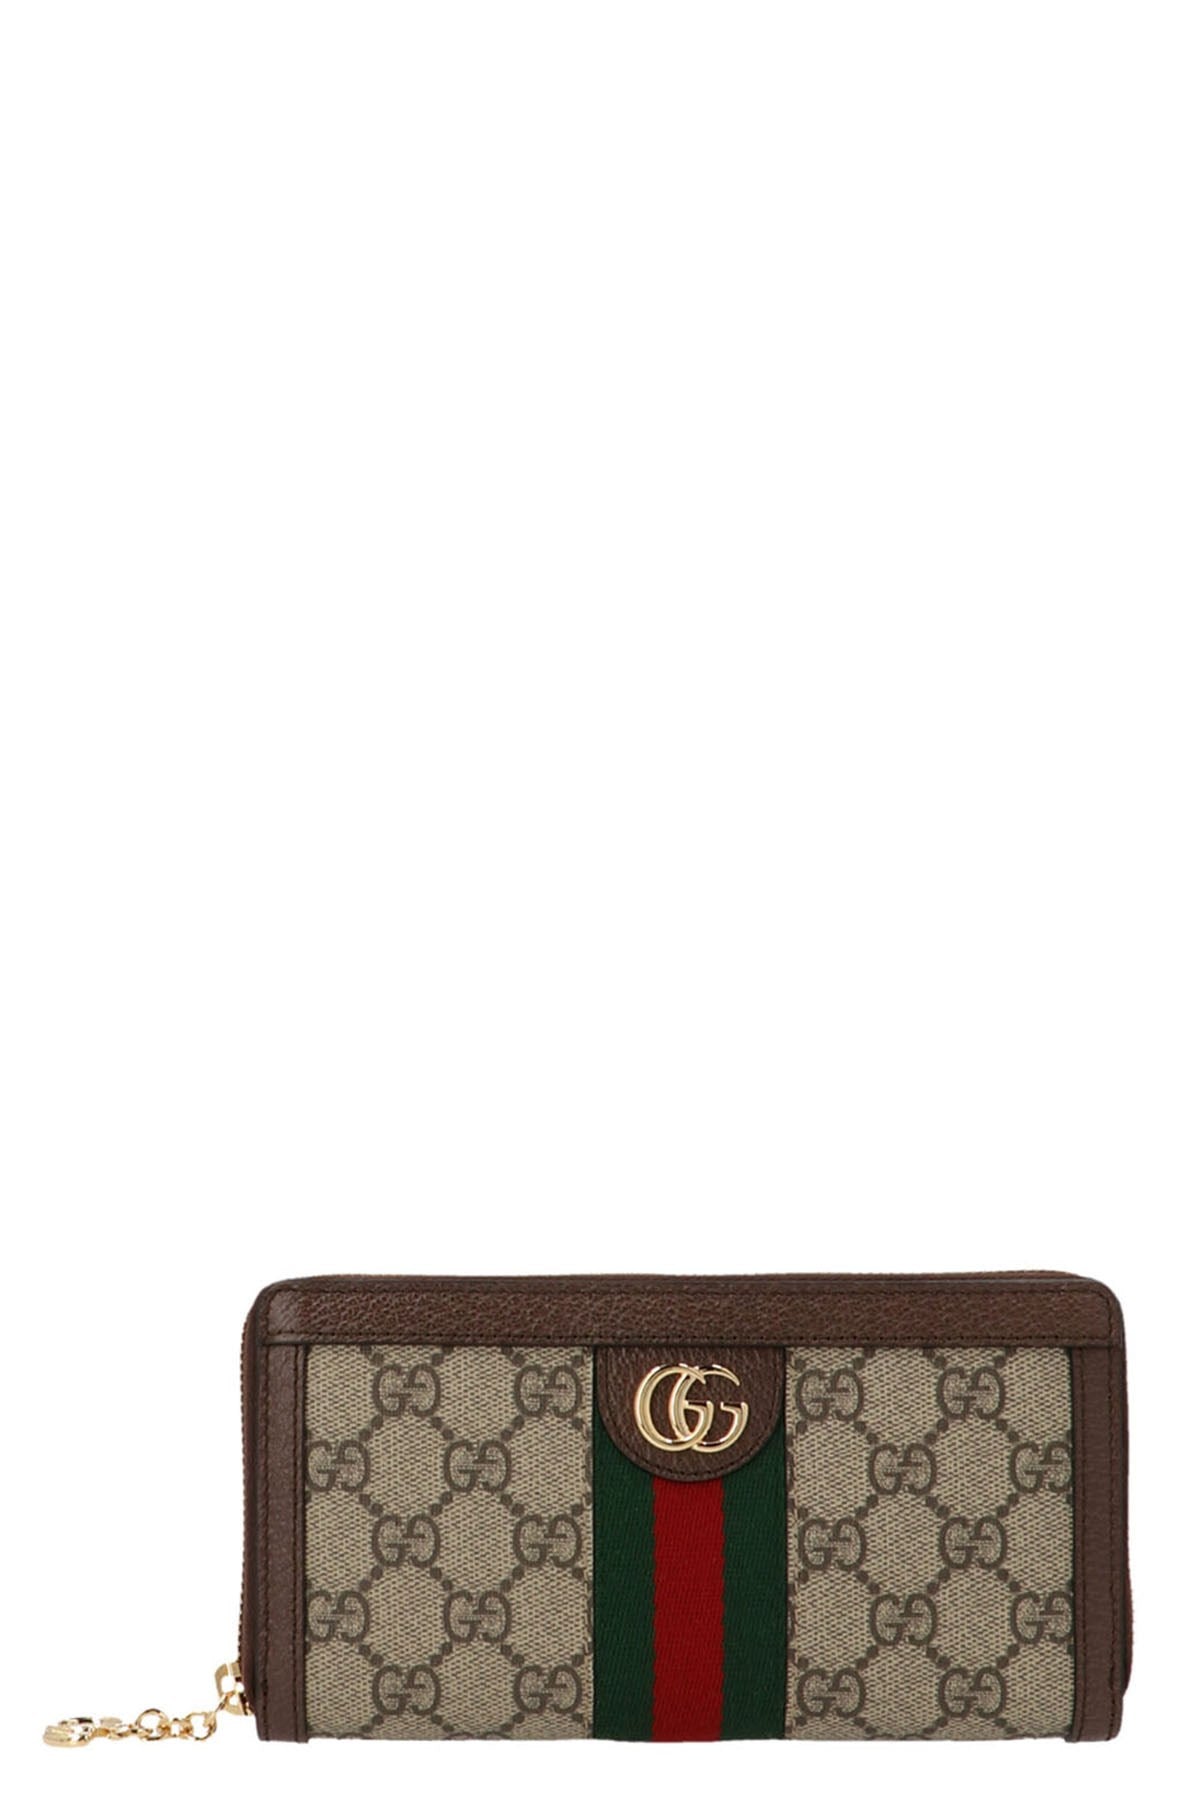 Gucci Women 'ophidia' Wallet In Brown